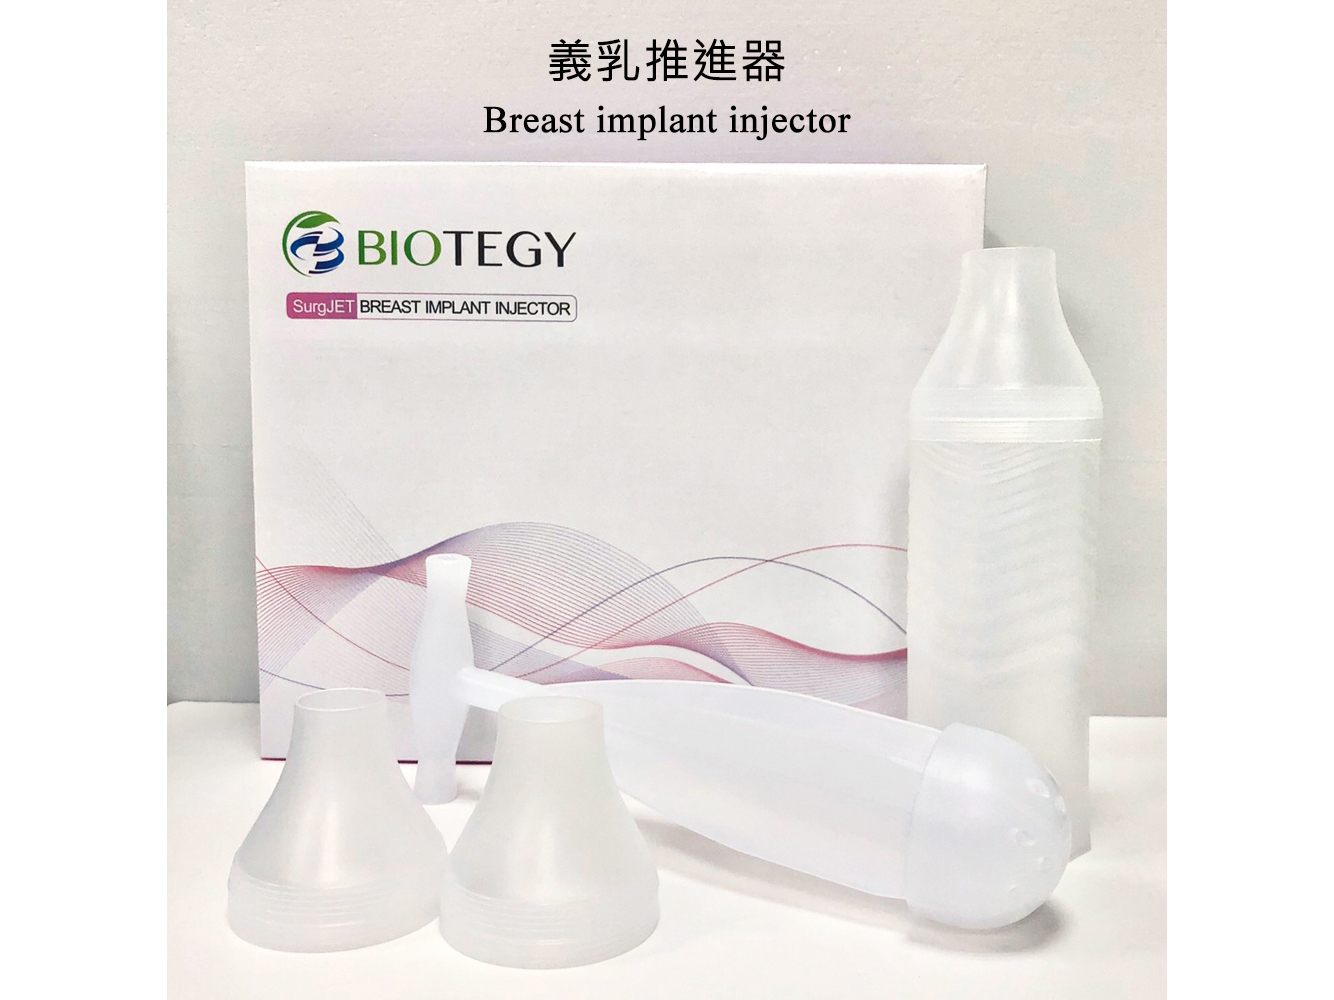 Biotegy Corporation Ltd